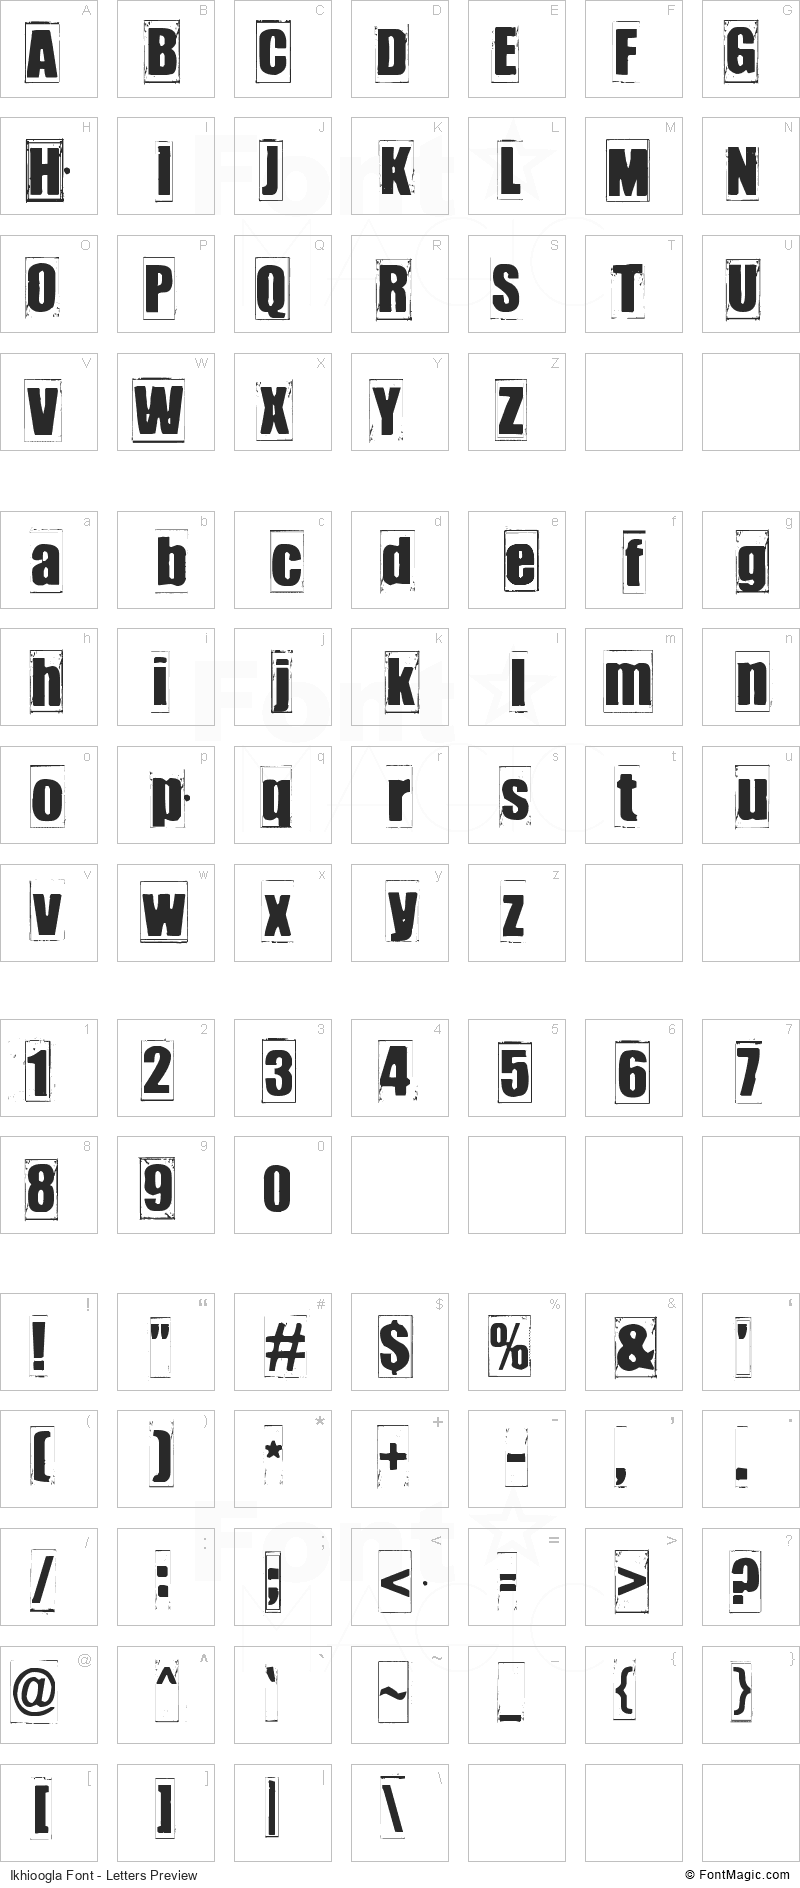 Ikhioogla Font - All Latters Preview Chart